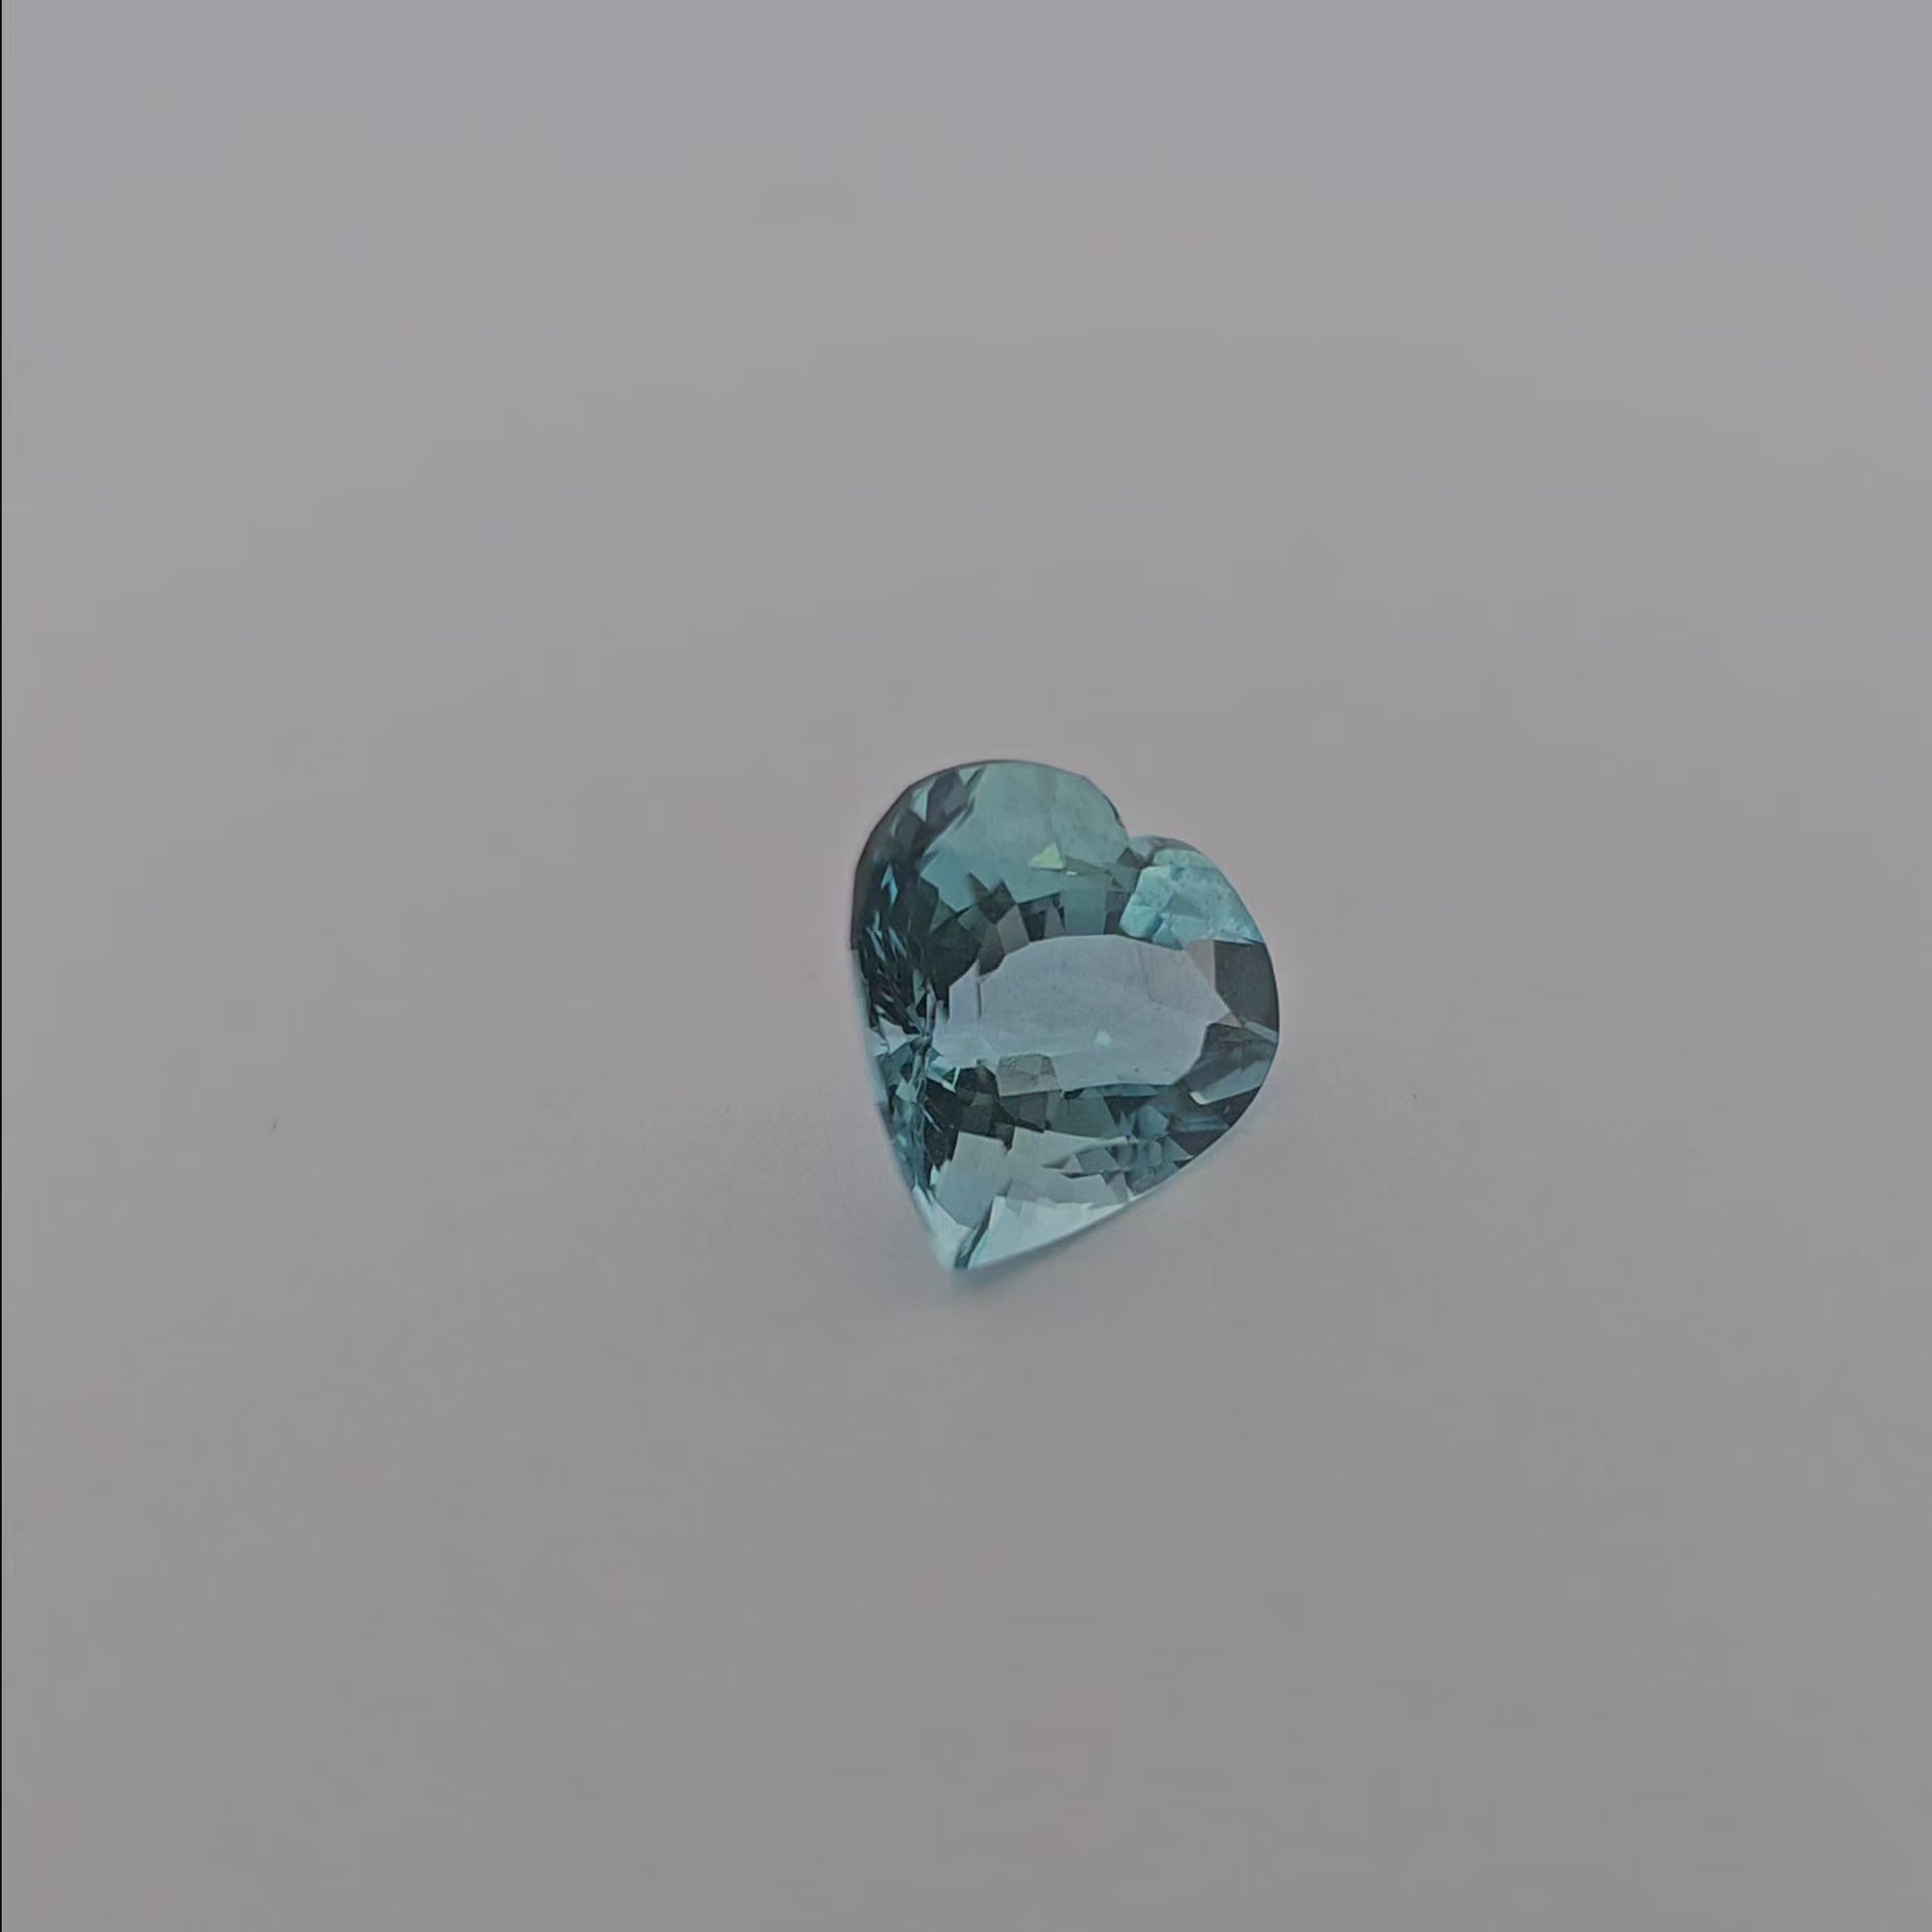 loose Natural Aquamarine Stone 4.67 Carats Heart Shape 11.7 x 11.8 mm